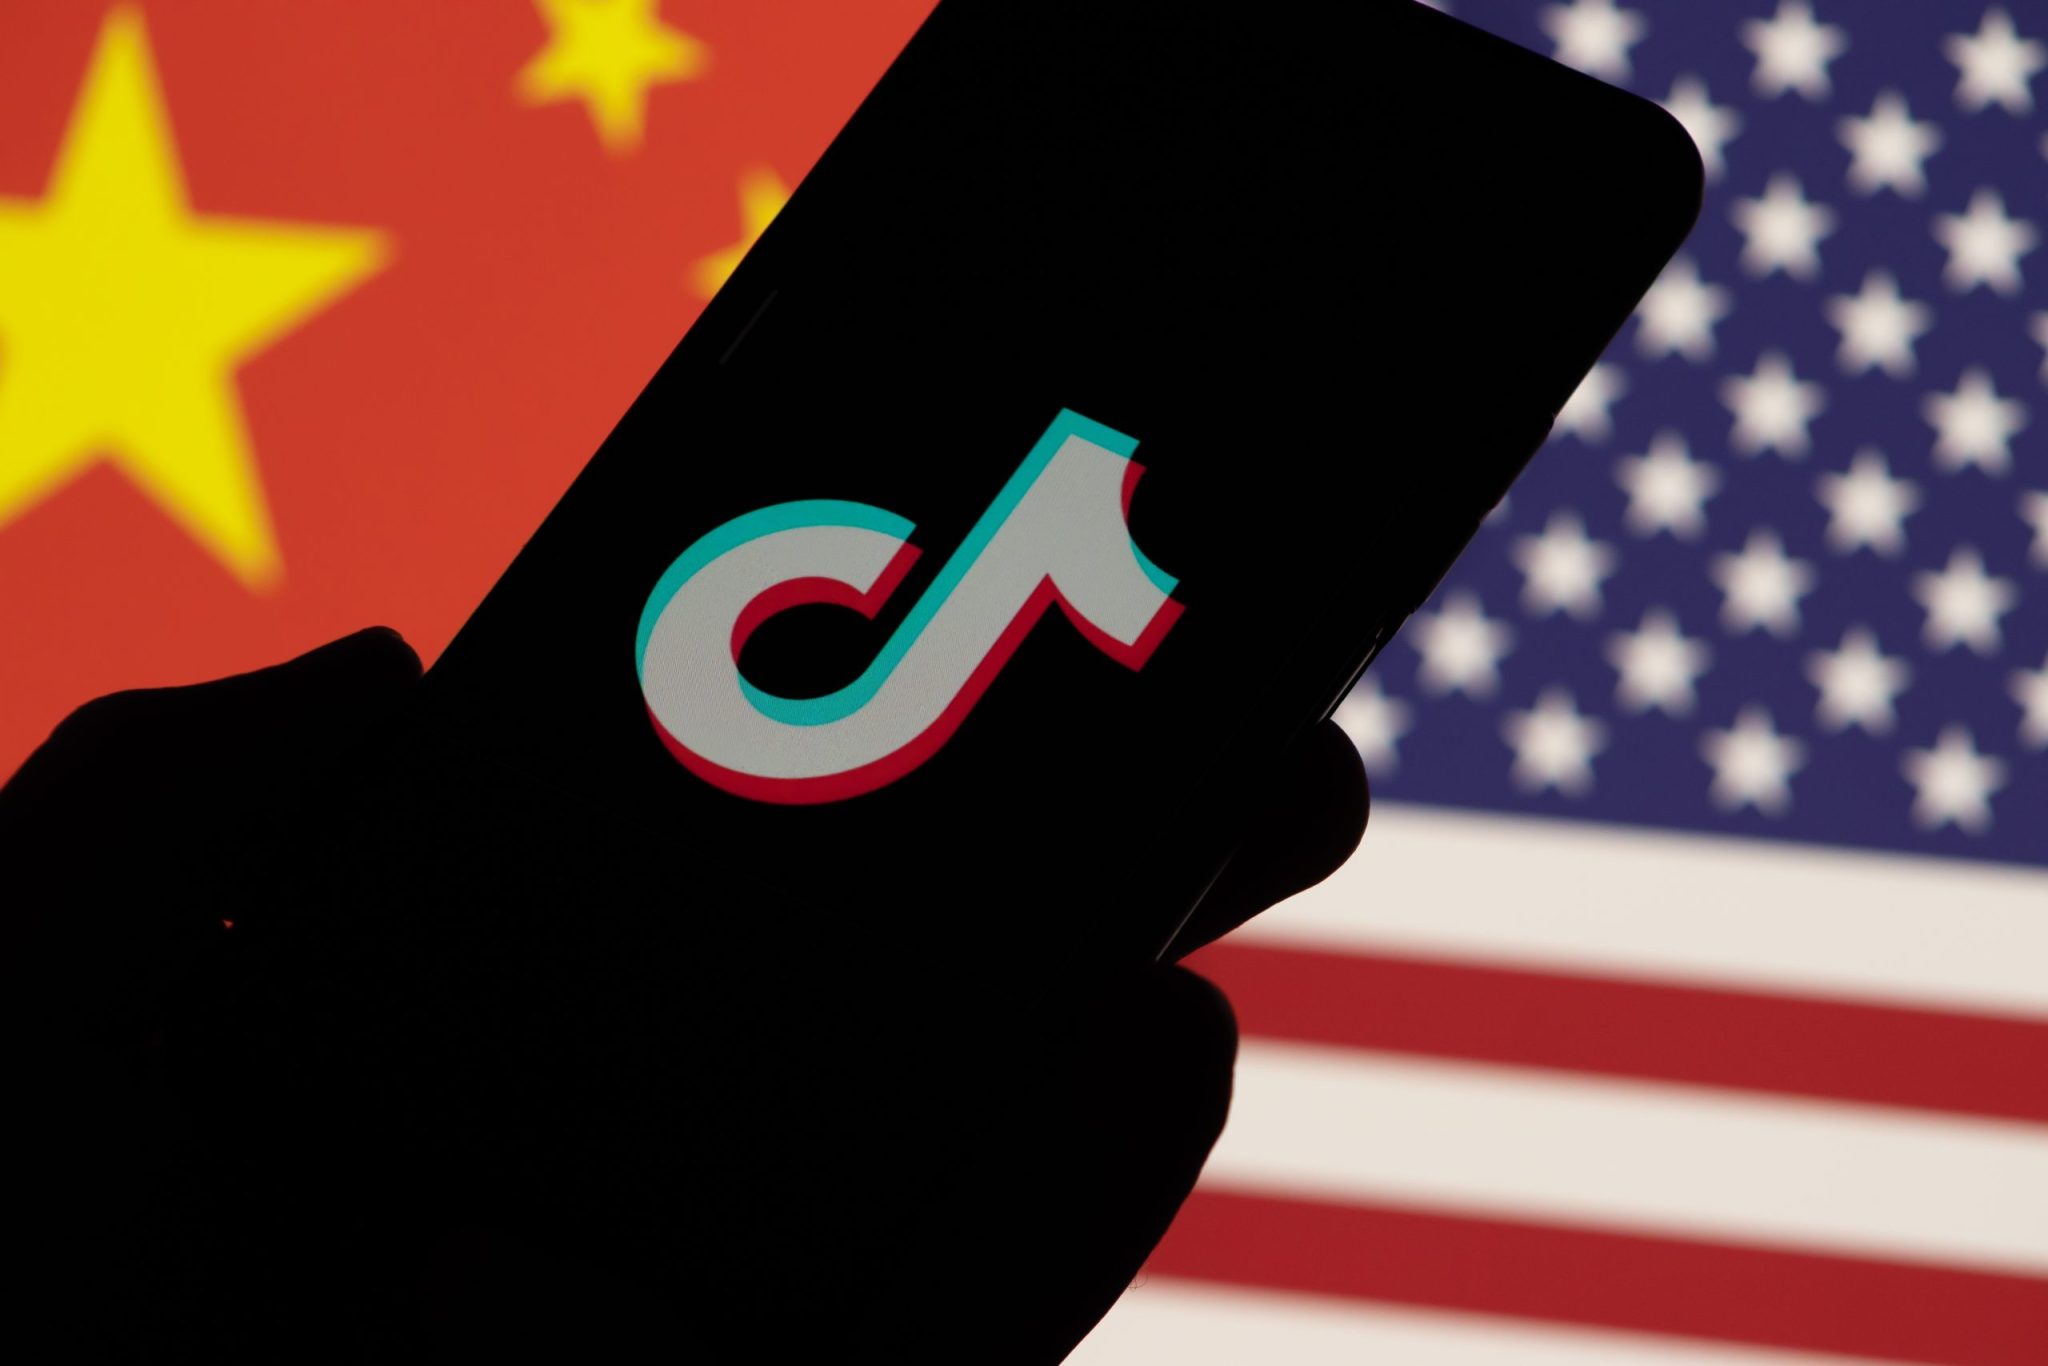 Smartphone with TikTok brand logo on screen and USA vs China flag background.